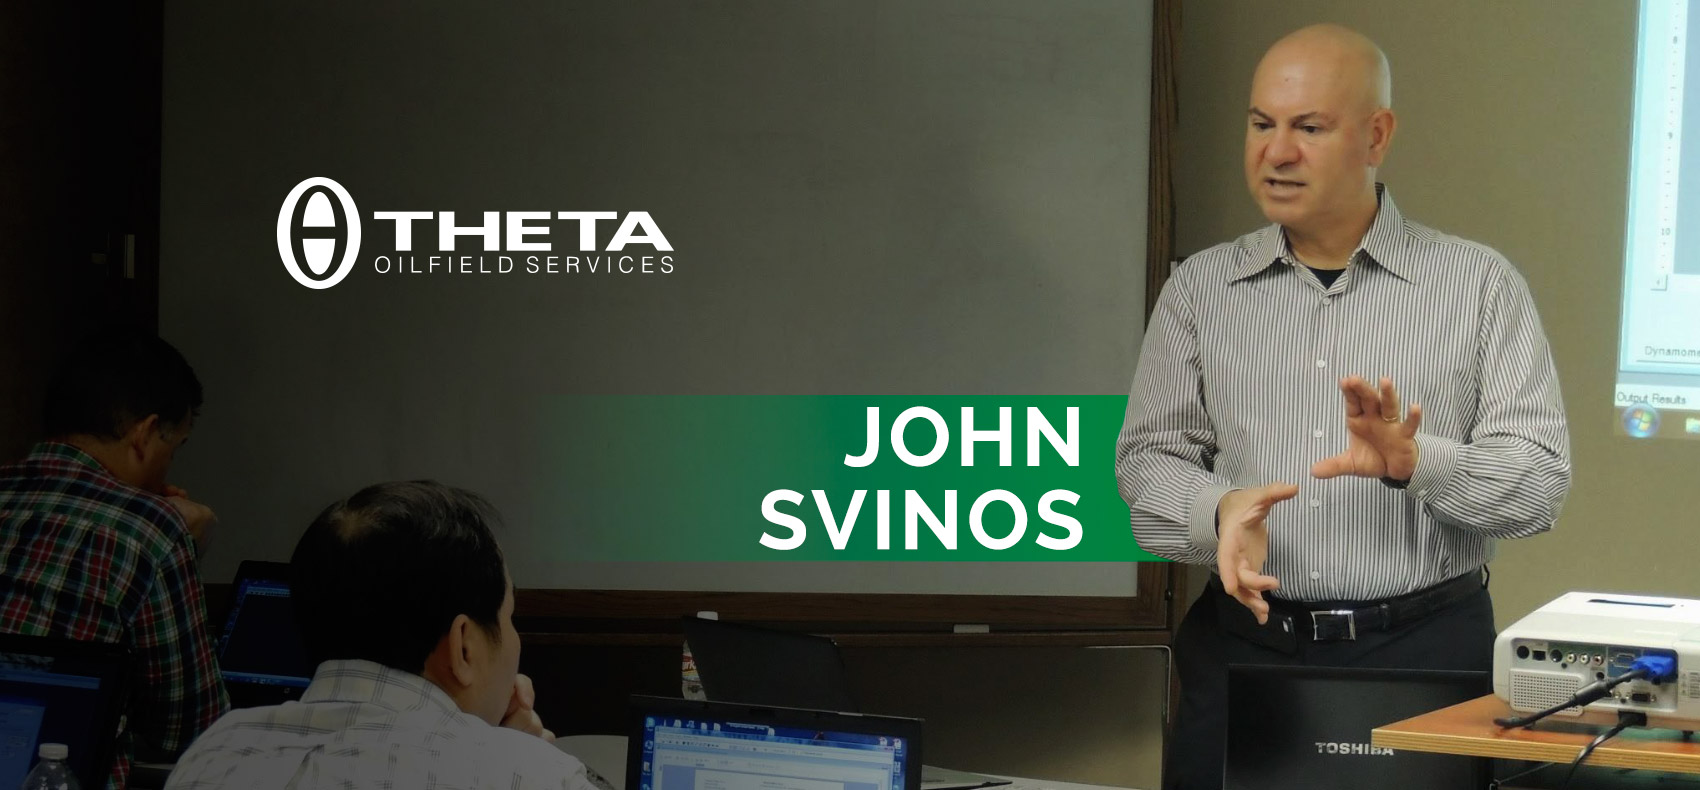 Meet John G. Svinos: Expert and founder of Theta Software Suite